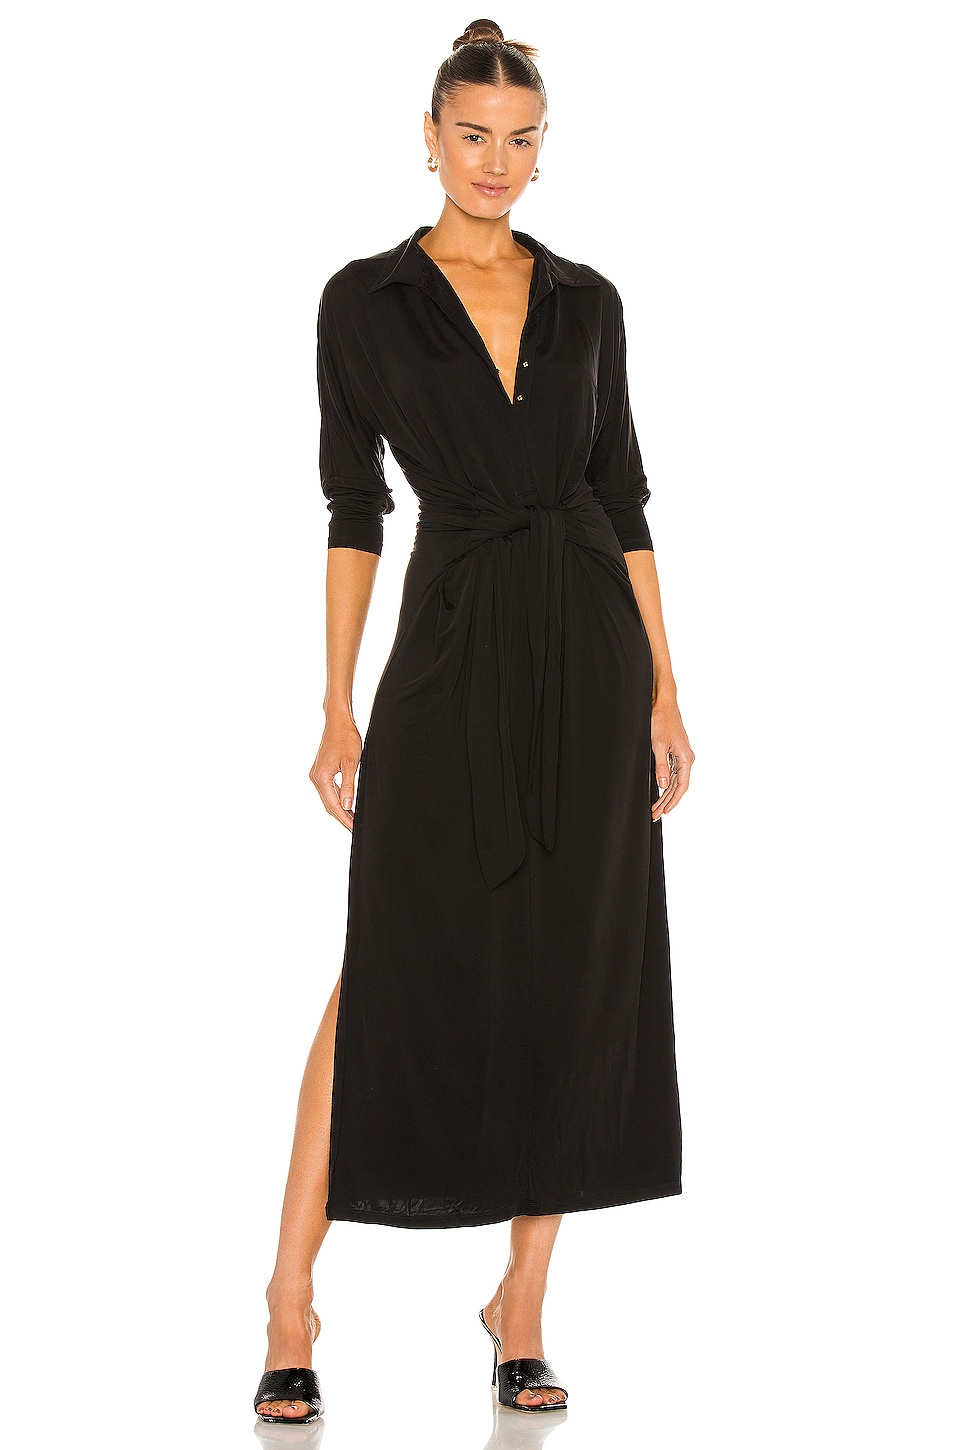 Yfb Clothing Kamalla Dress In Black Revolve